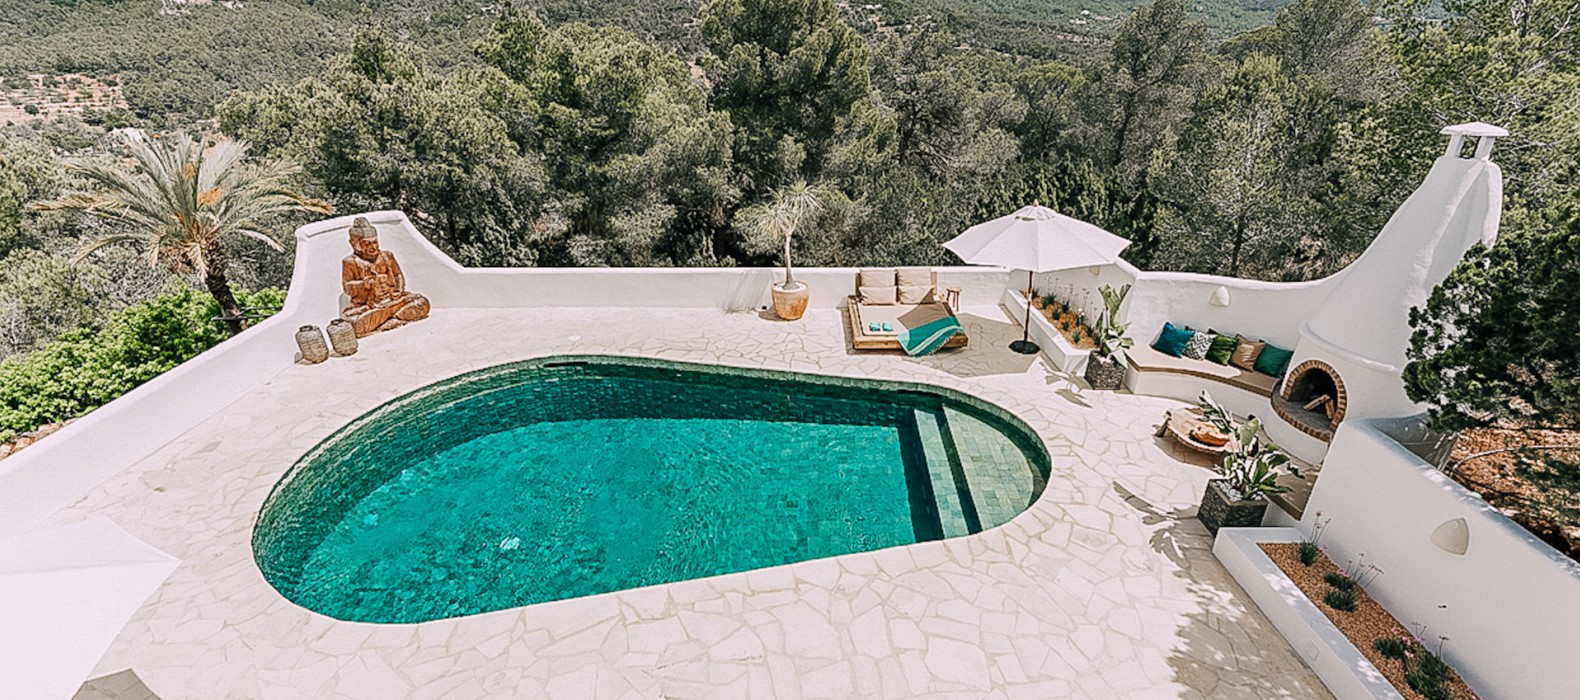 Outside area with lounge and pool of Villa La Colina in Ibiza